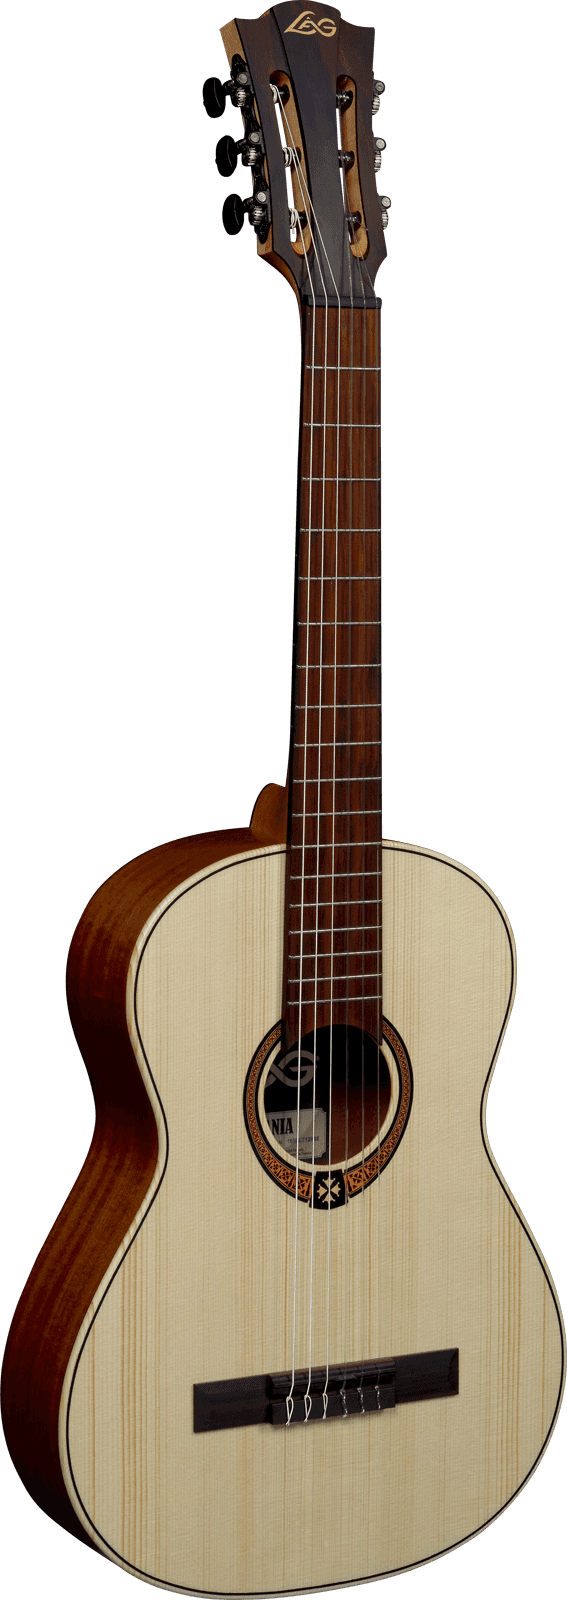 Guitare classique OCL70 GAUCHER-3 - Voir en grand